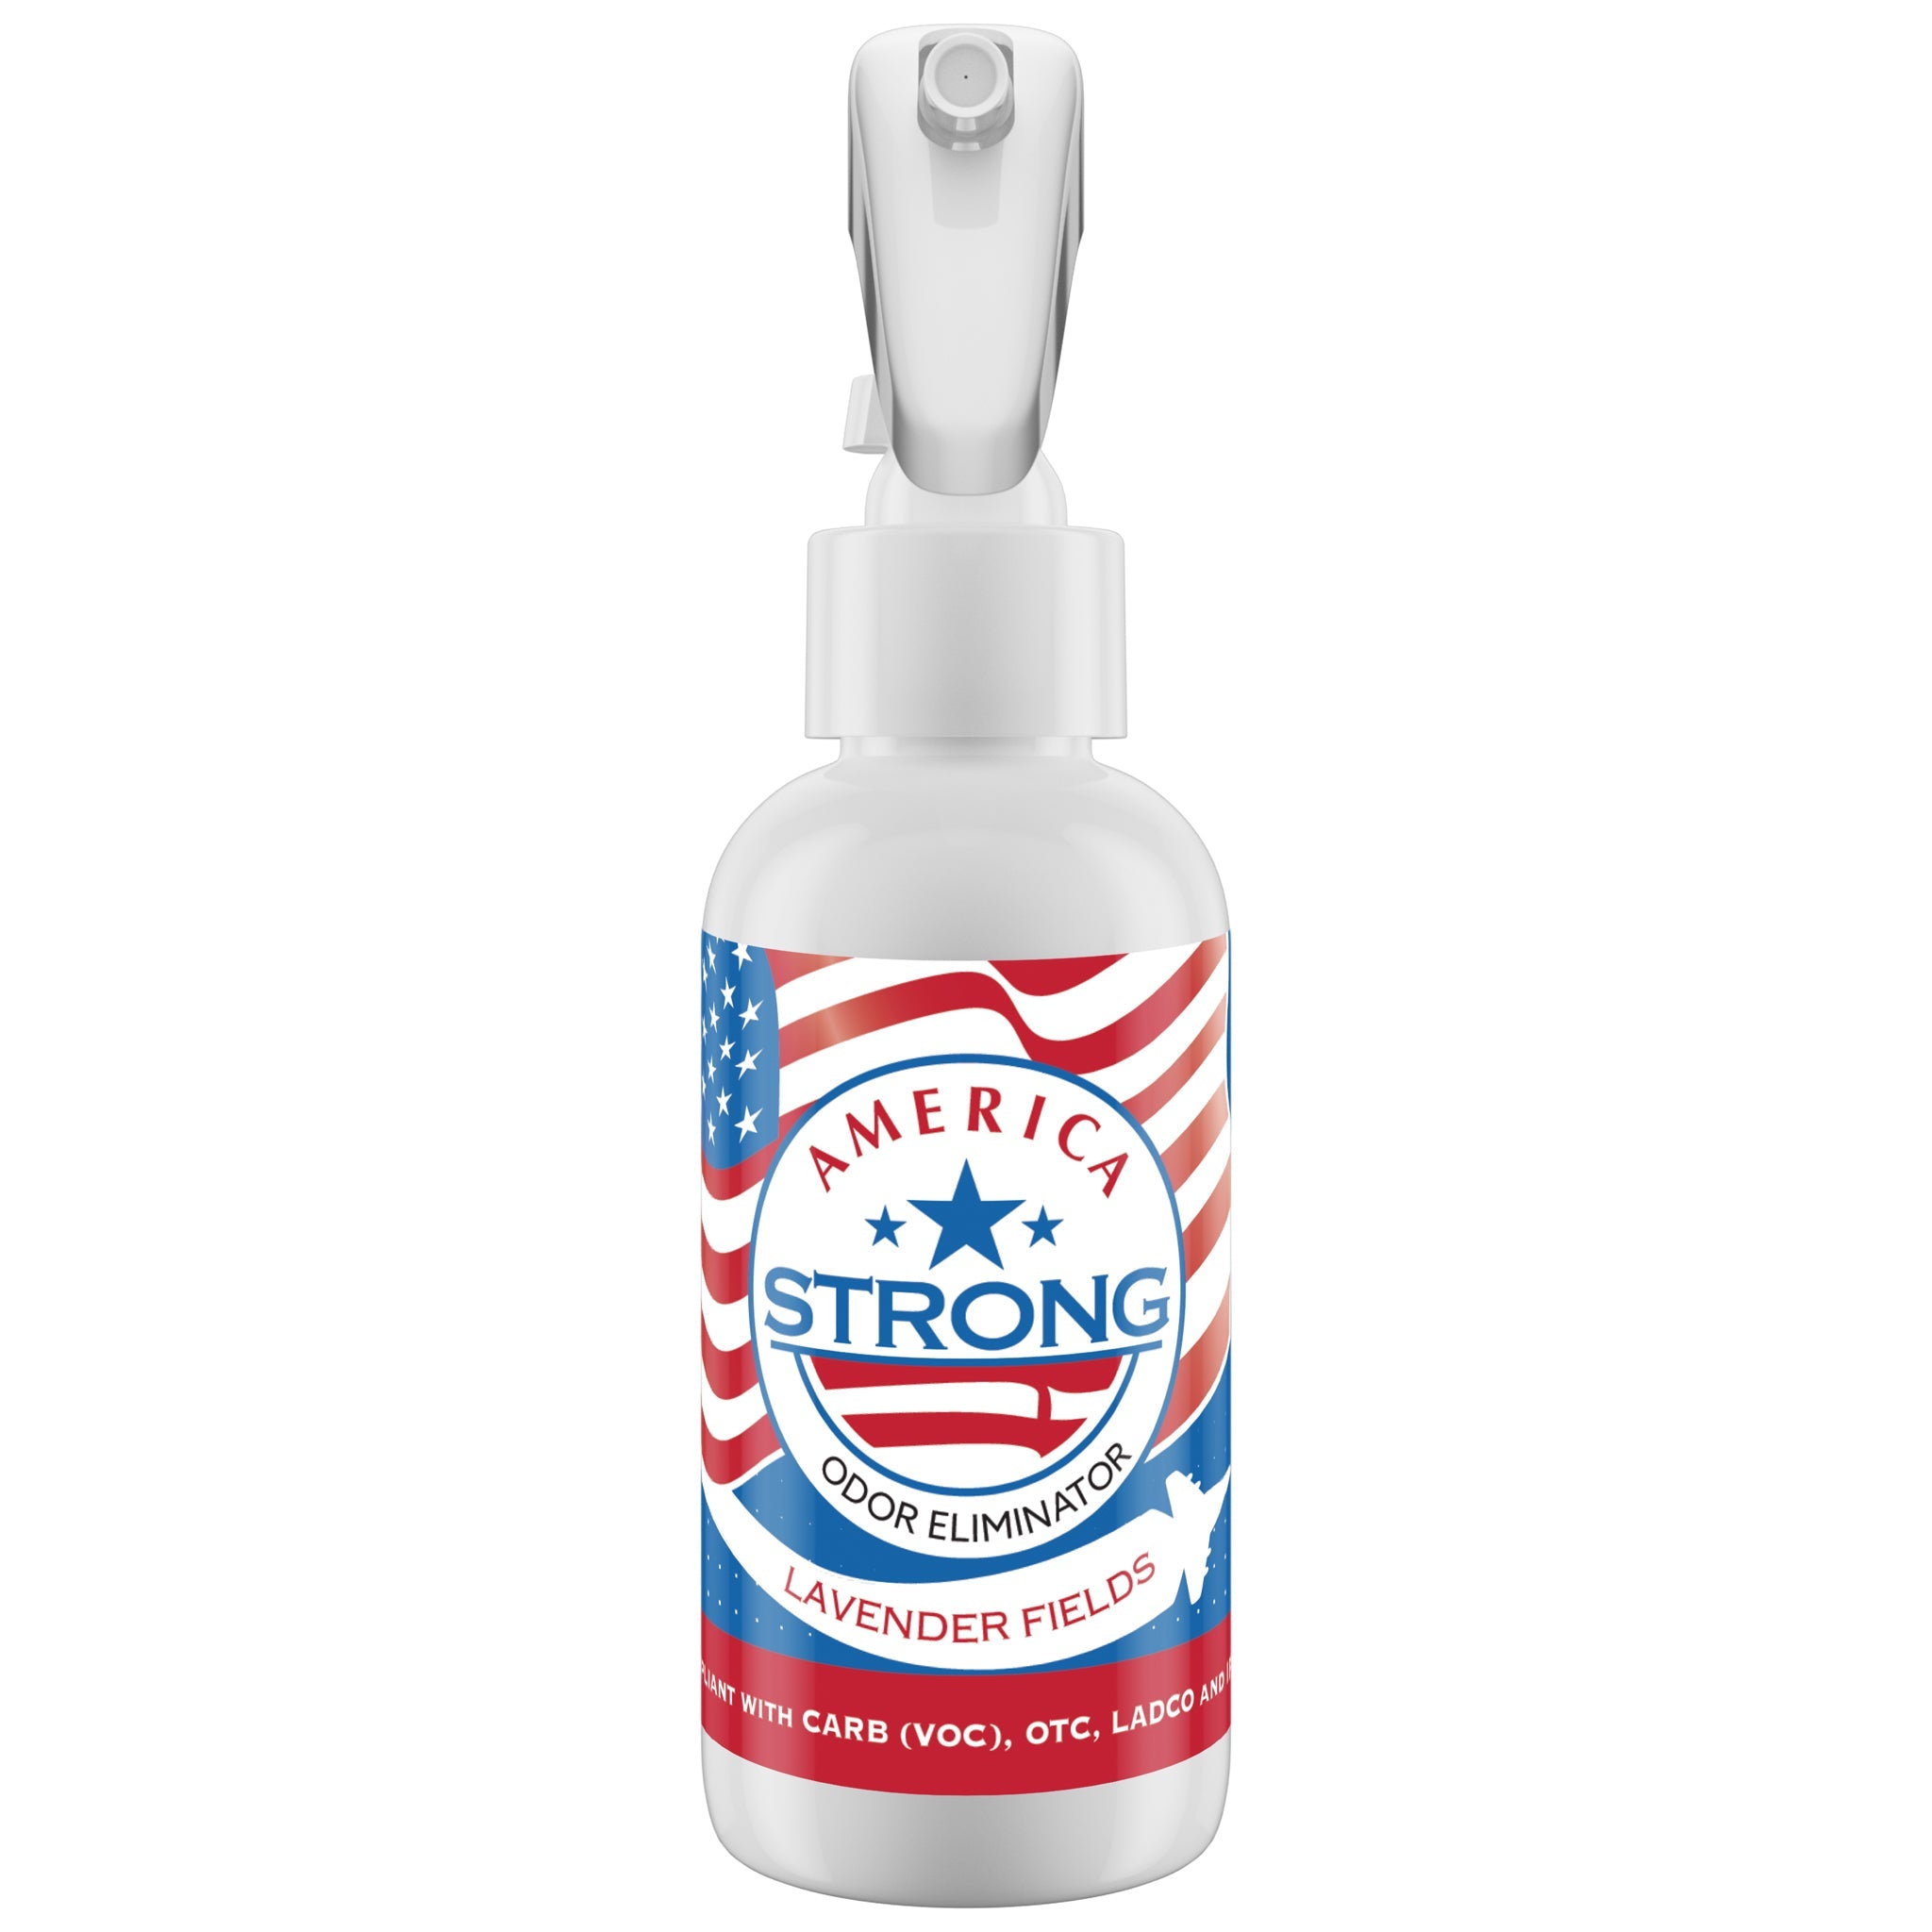 America Strong Odor Eliminator - Lavender Fields Scent Size: 4.0oz